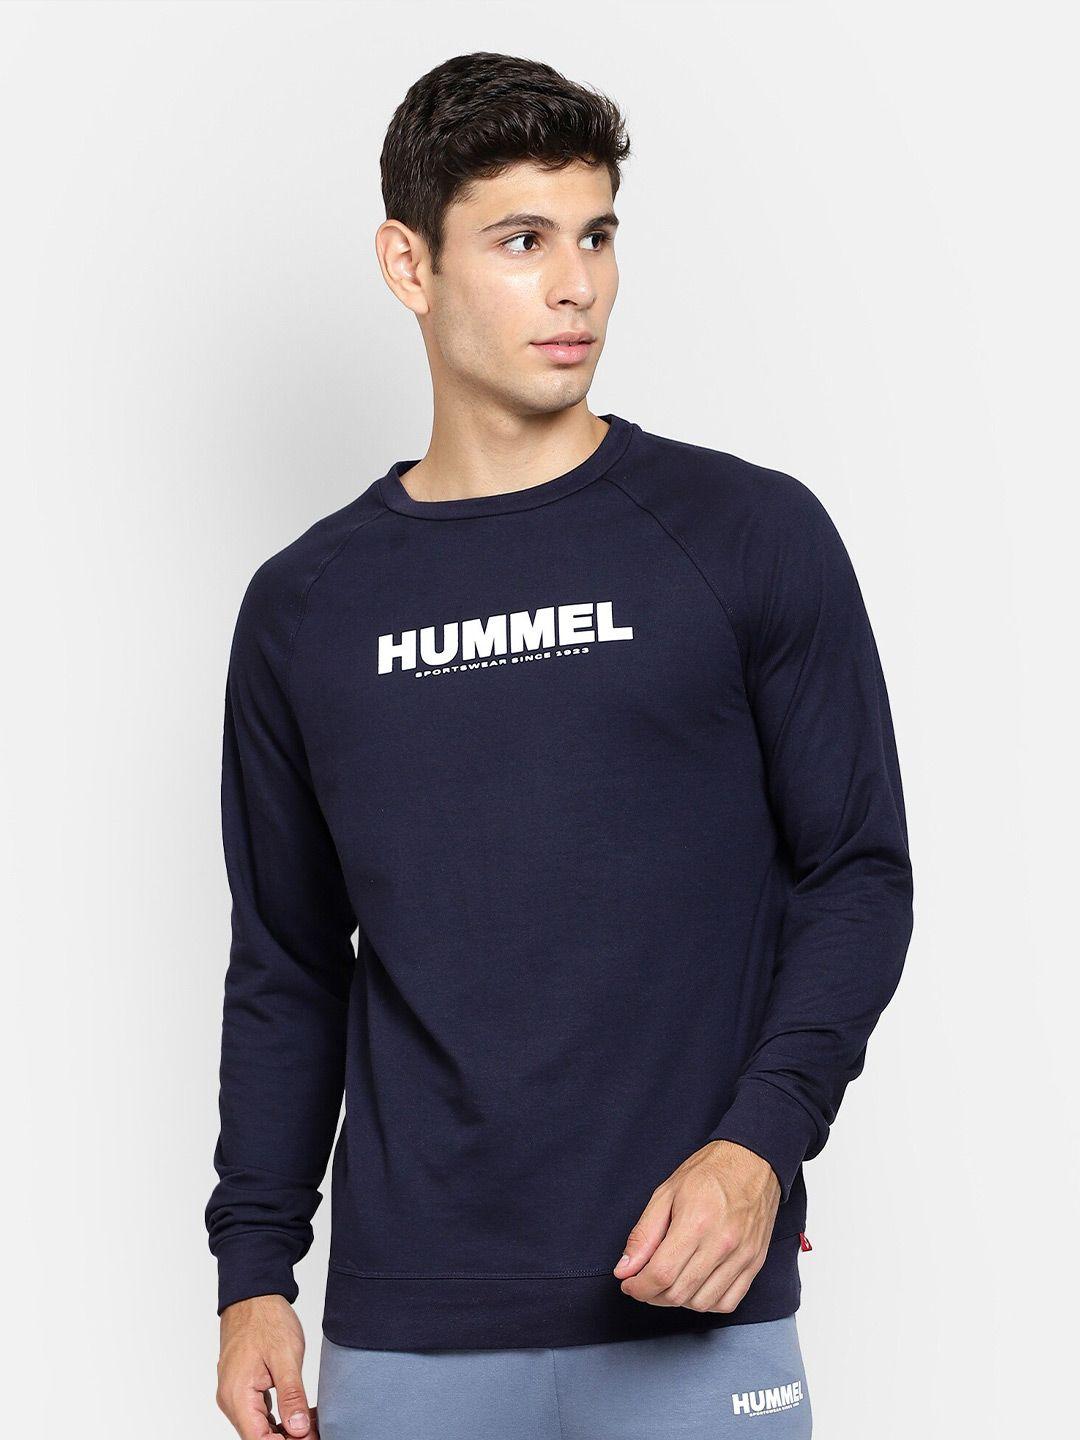 hummel men navy blue printed pure cotton sweatshirt